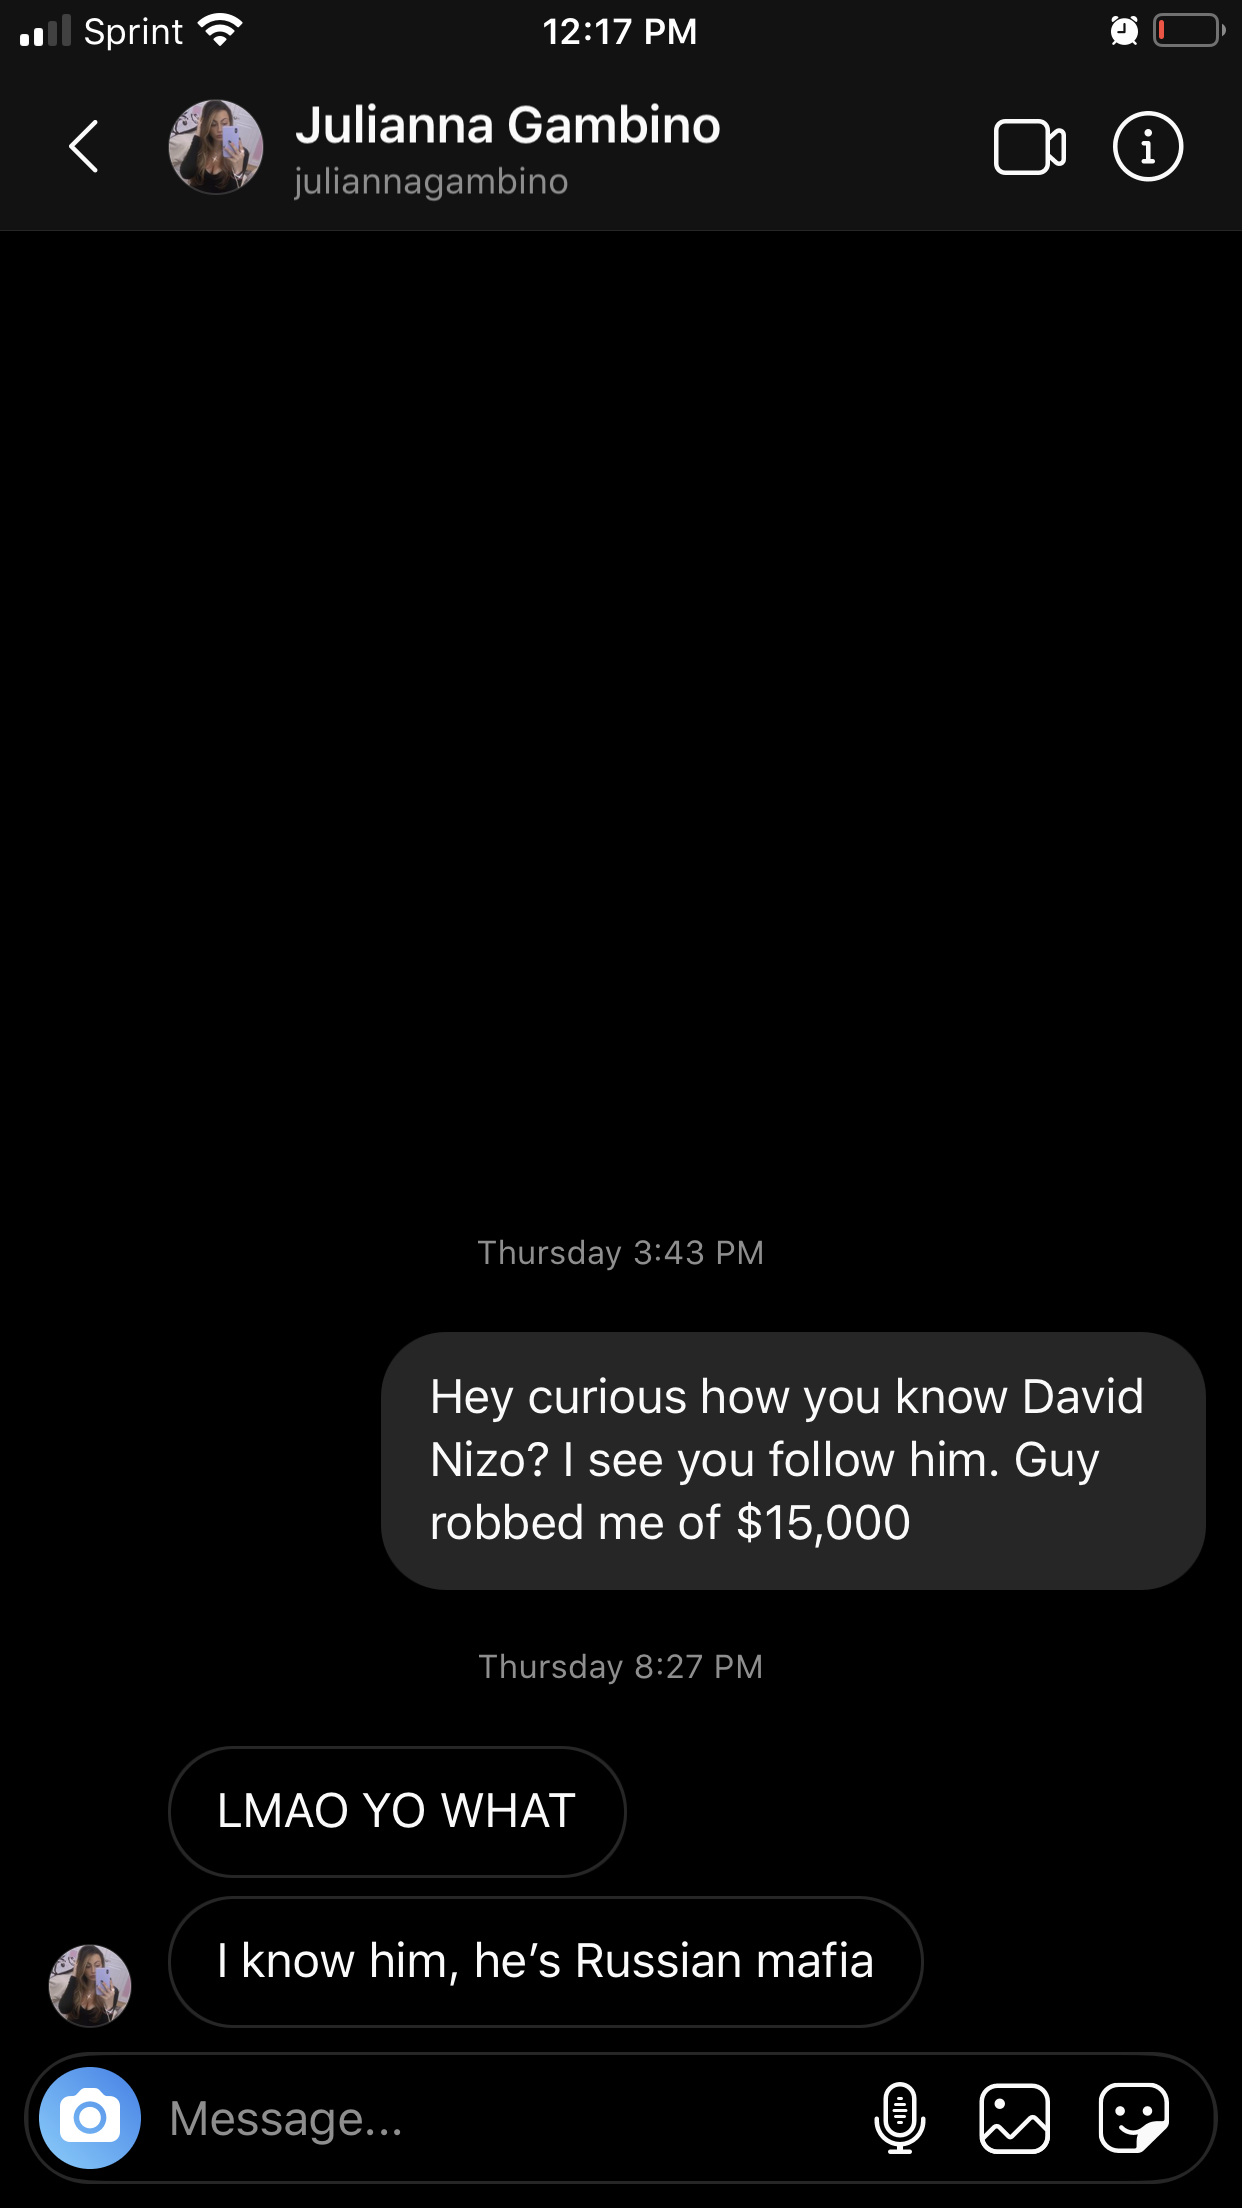 Friend Of David claiming he is Russian Mafia